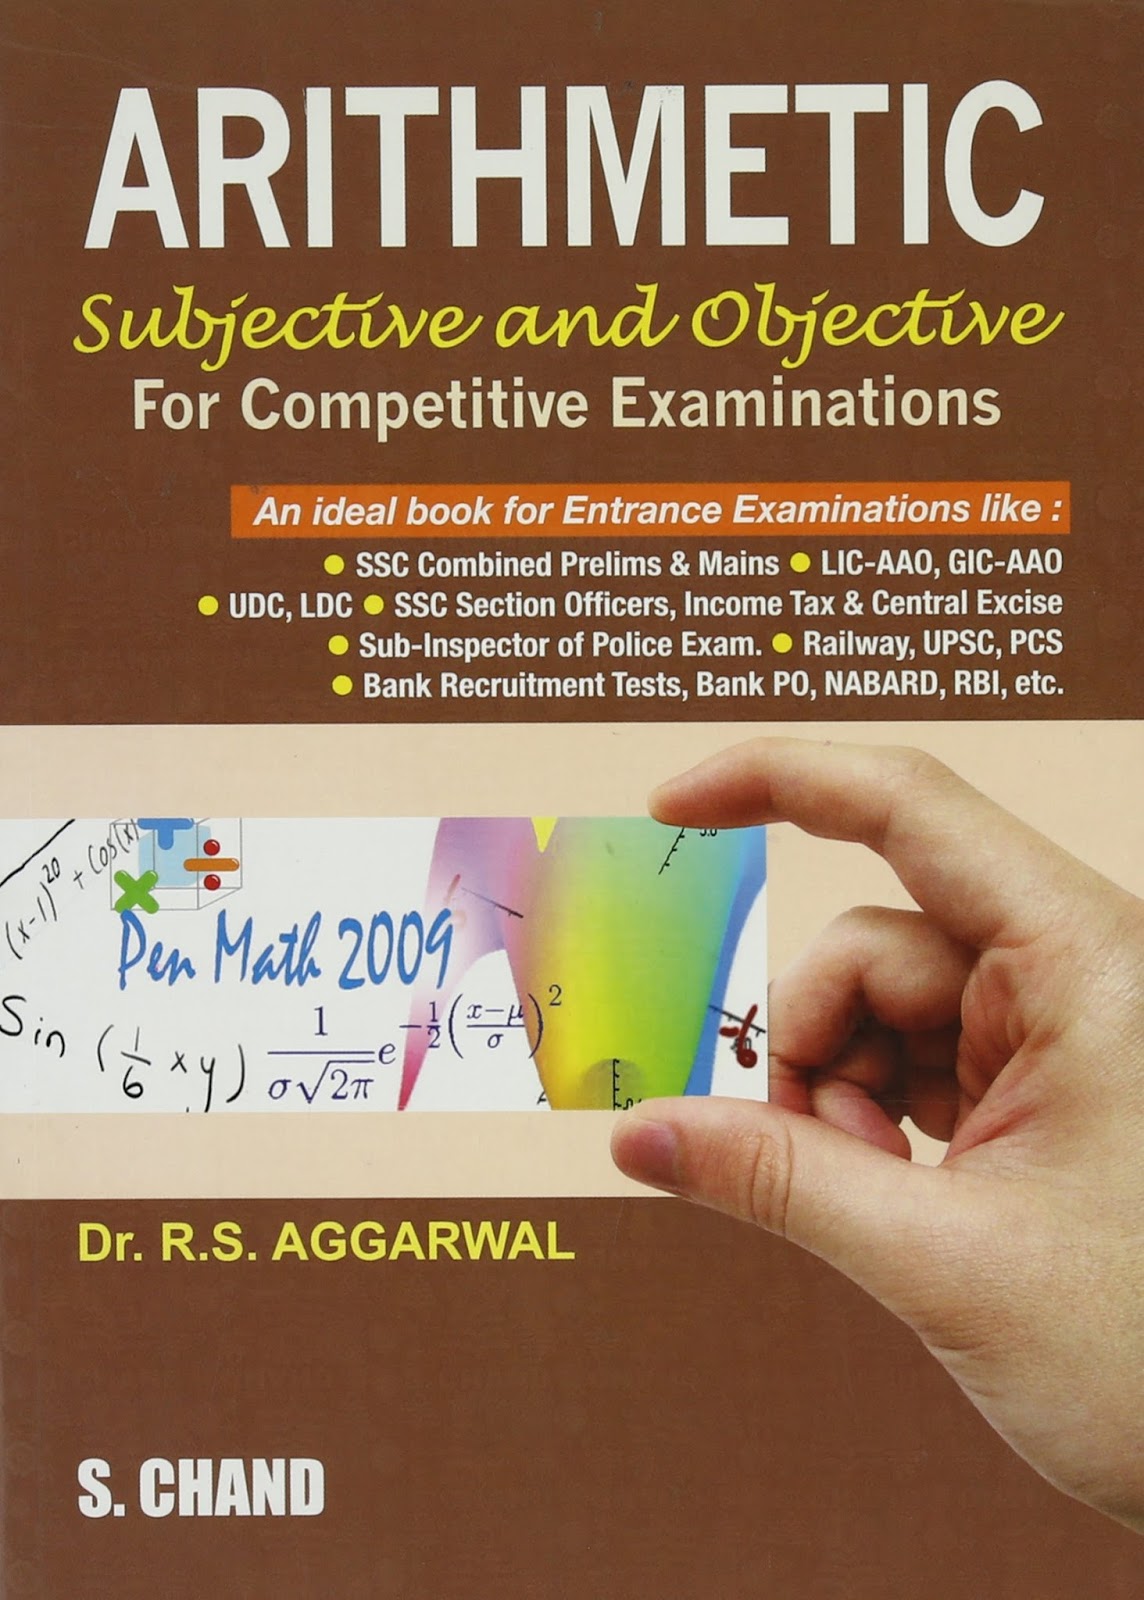 rs-aggarwal-quantitative-aptitude-book-pdf-free-download-2015-scribd-india